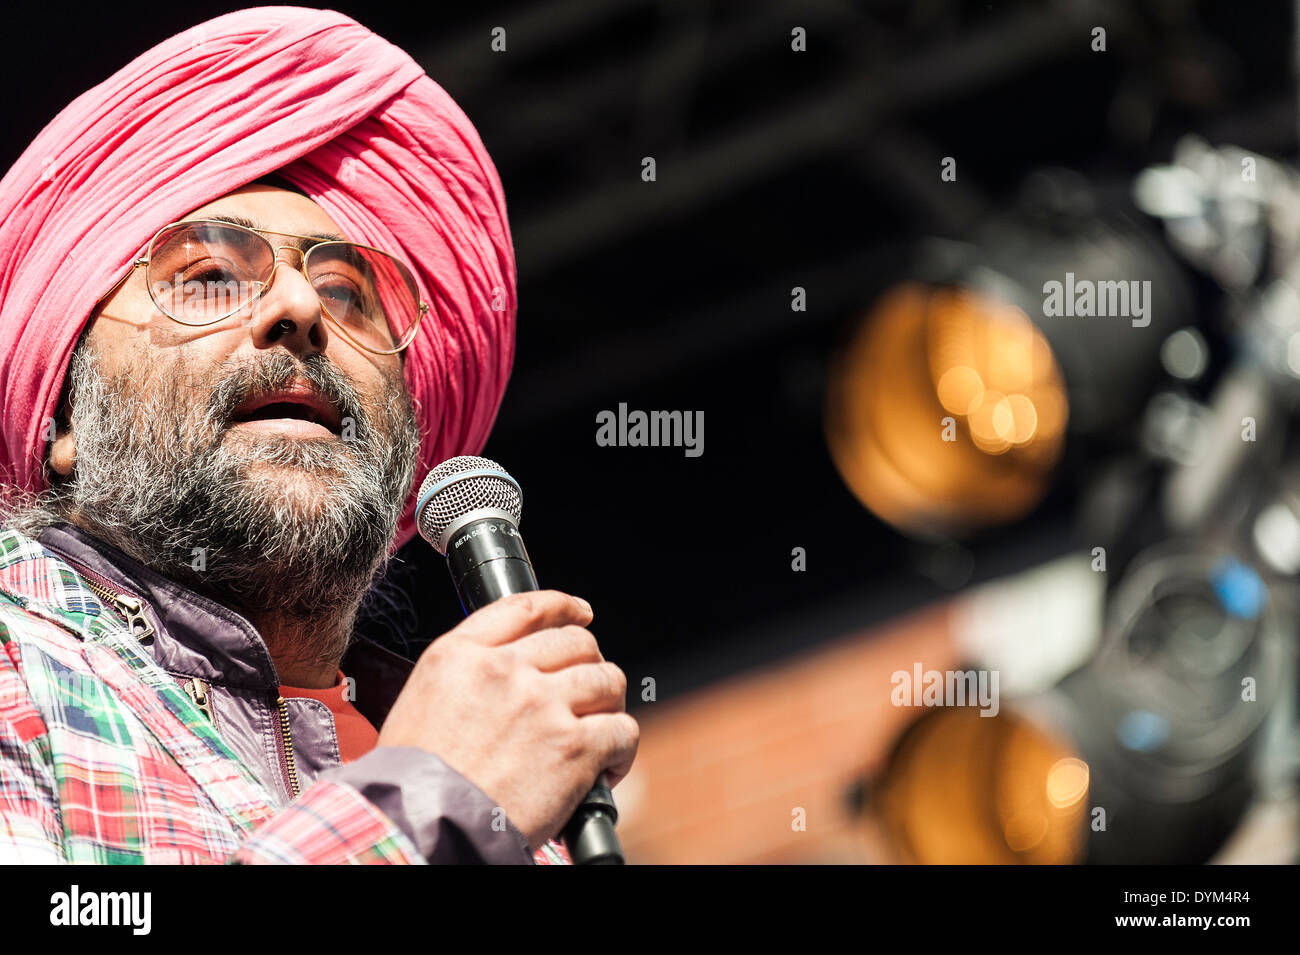 Hardeep Singh Kohli compering Berwick Street Record Day Konzert in London. Stockfoto